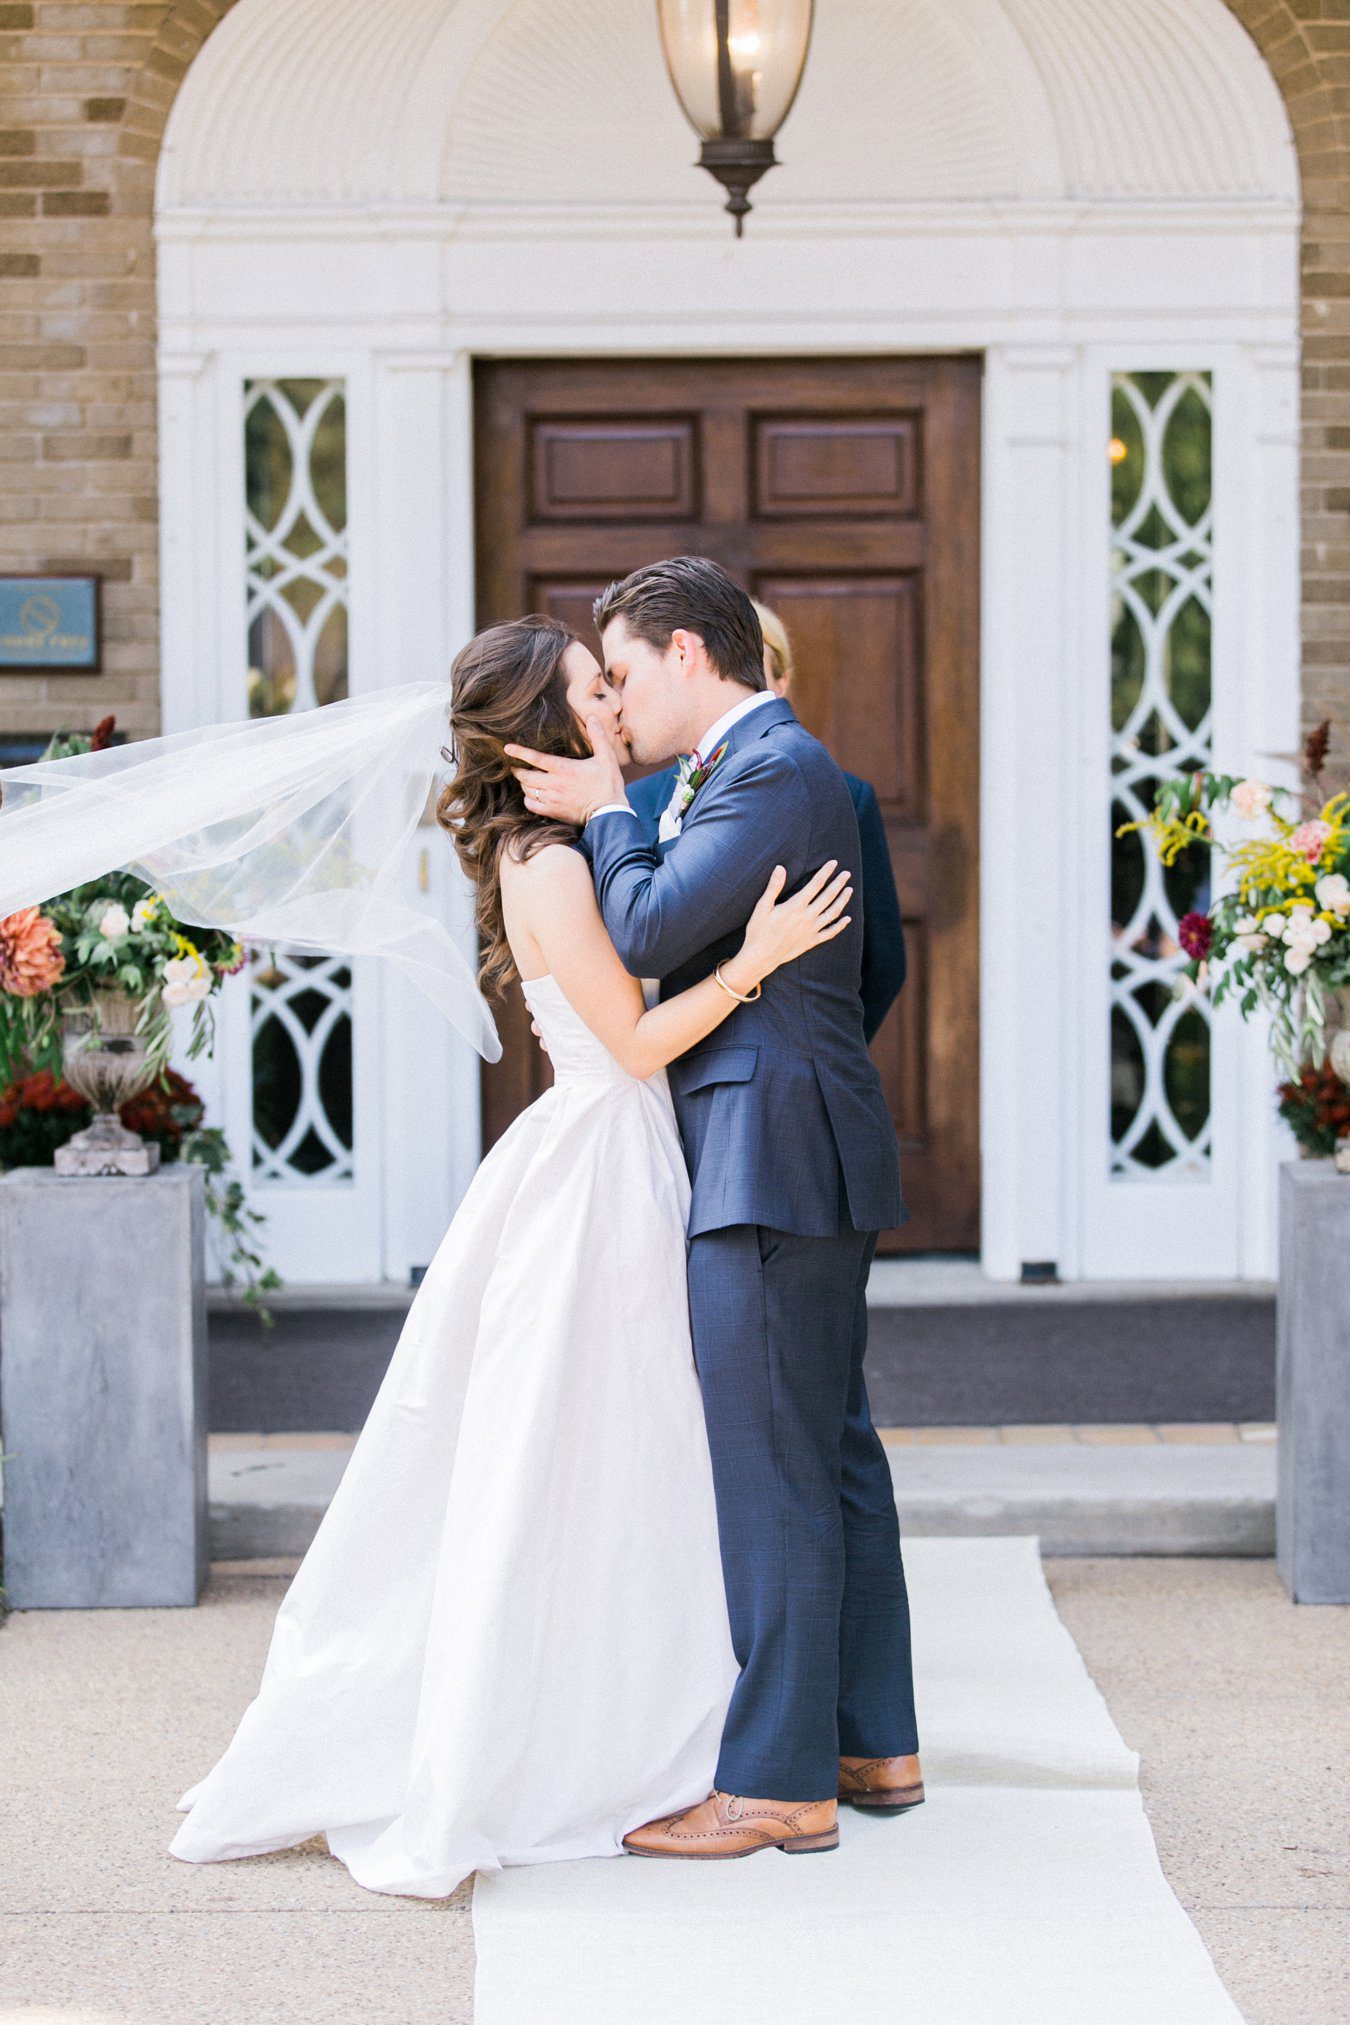 The Felt Mansion Holland Michigan Wedding Ceremony | Cory Weber Photography